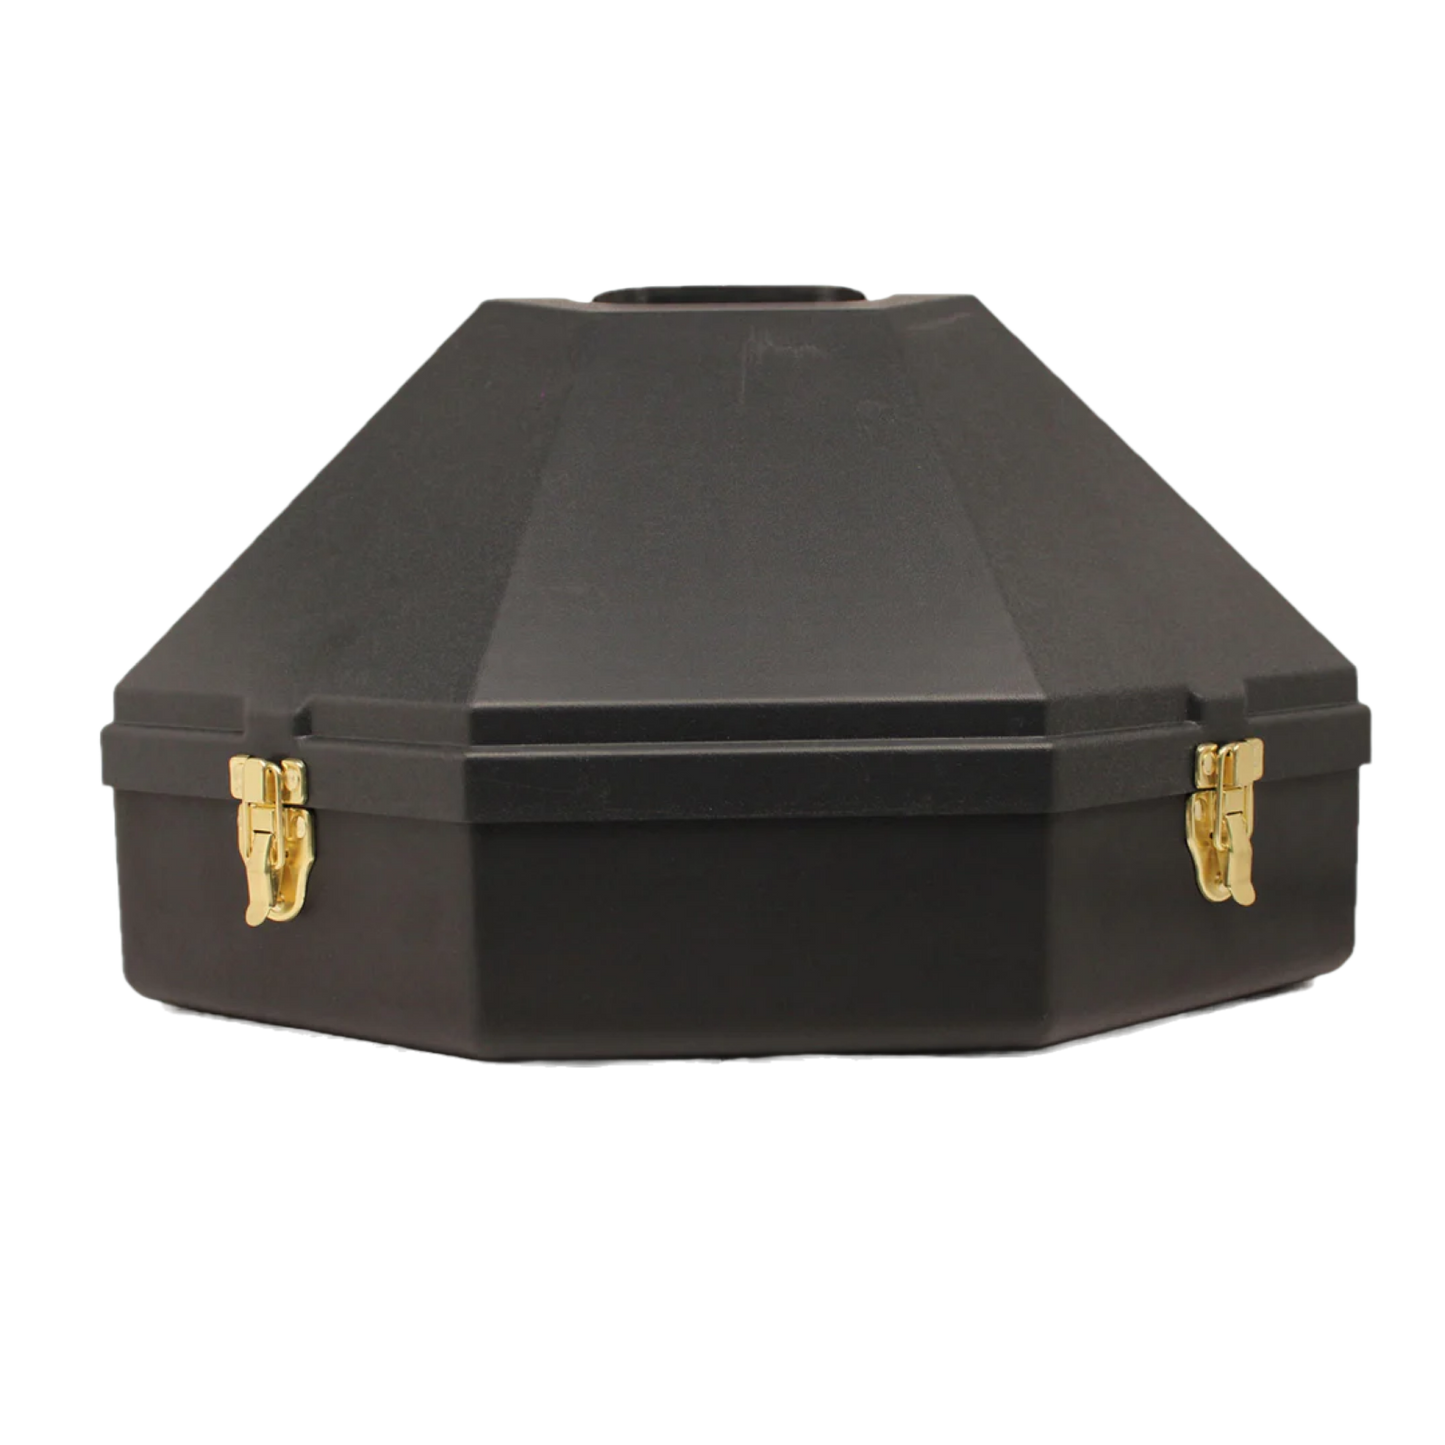 M&F® Large Black Hat Storage Case 0150001